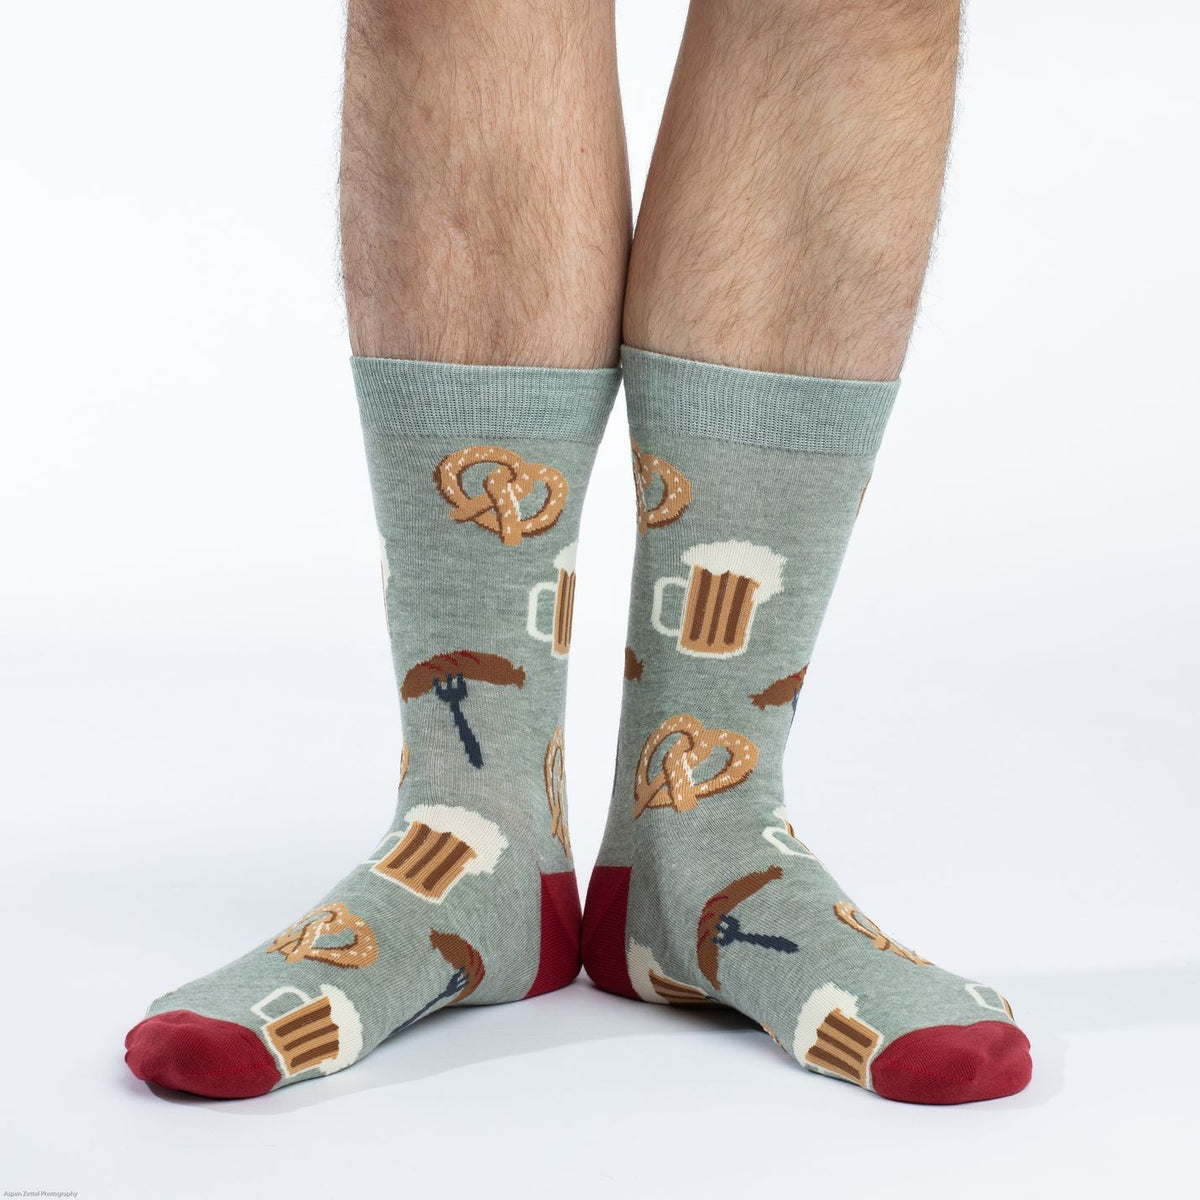 Bottomless Socks Telegraph 